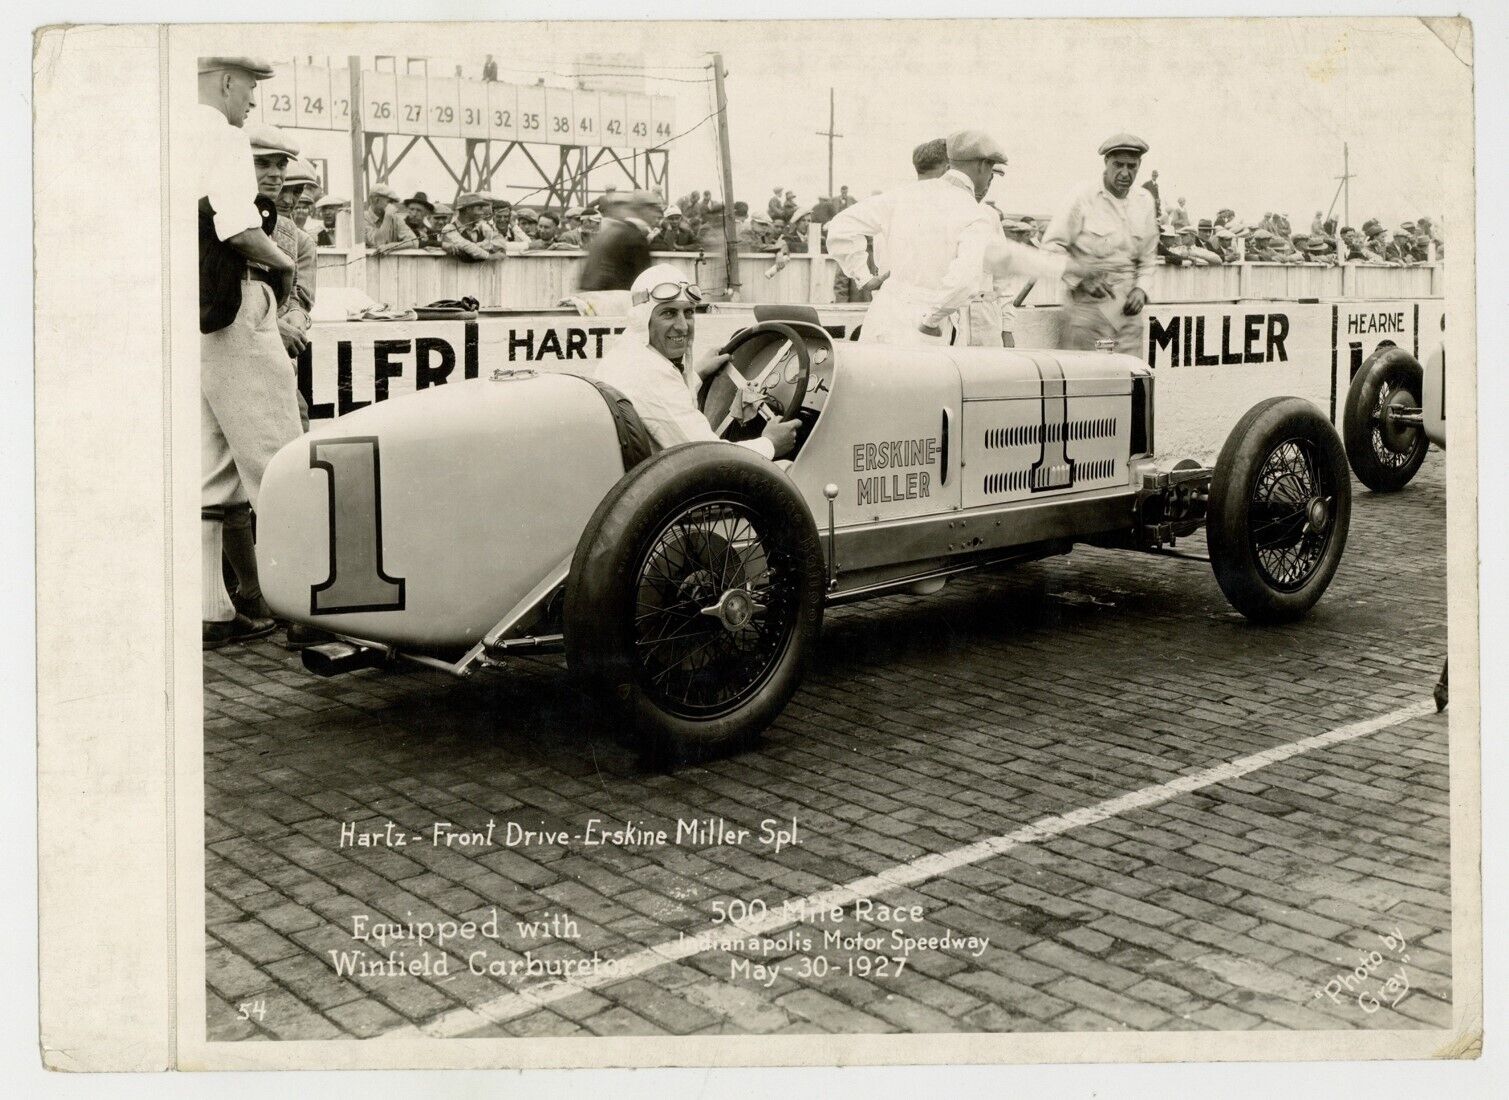 Harry Hartz 1925 Indianapolis 500 Erskine Miller Race Car Motor Speedway Photo